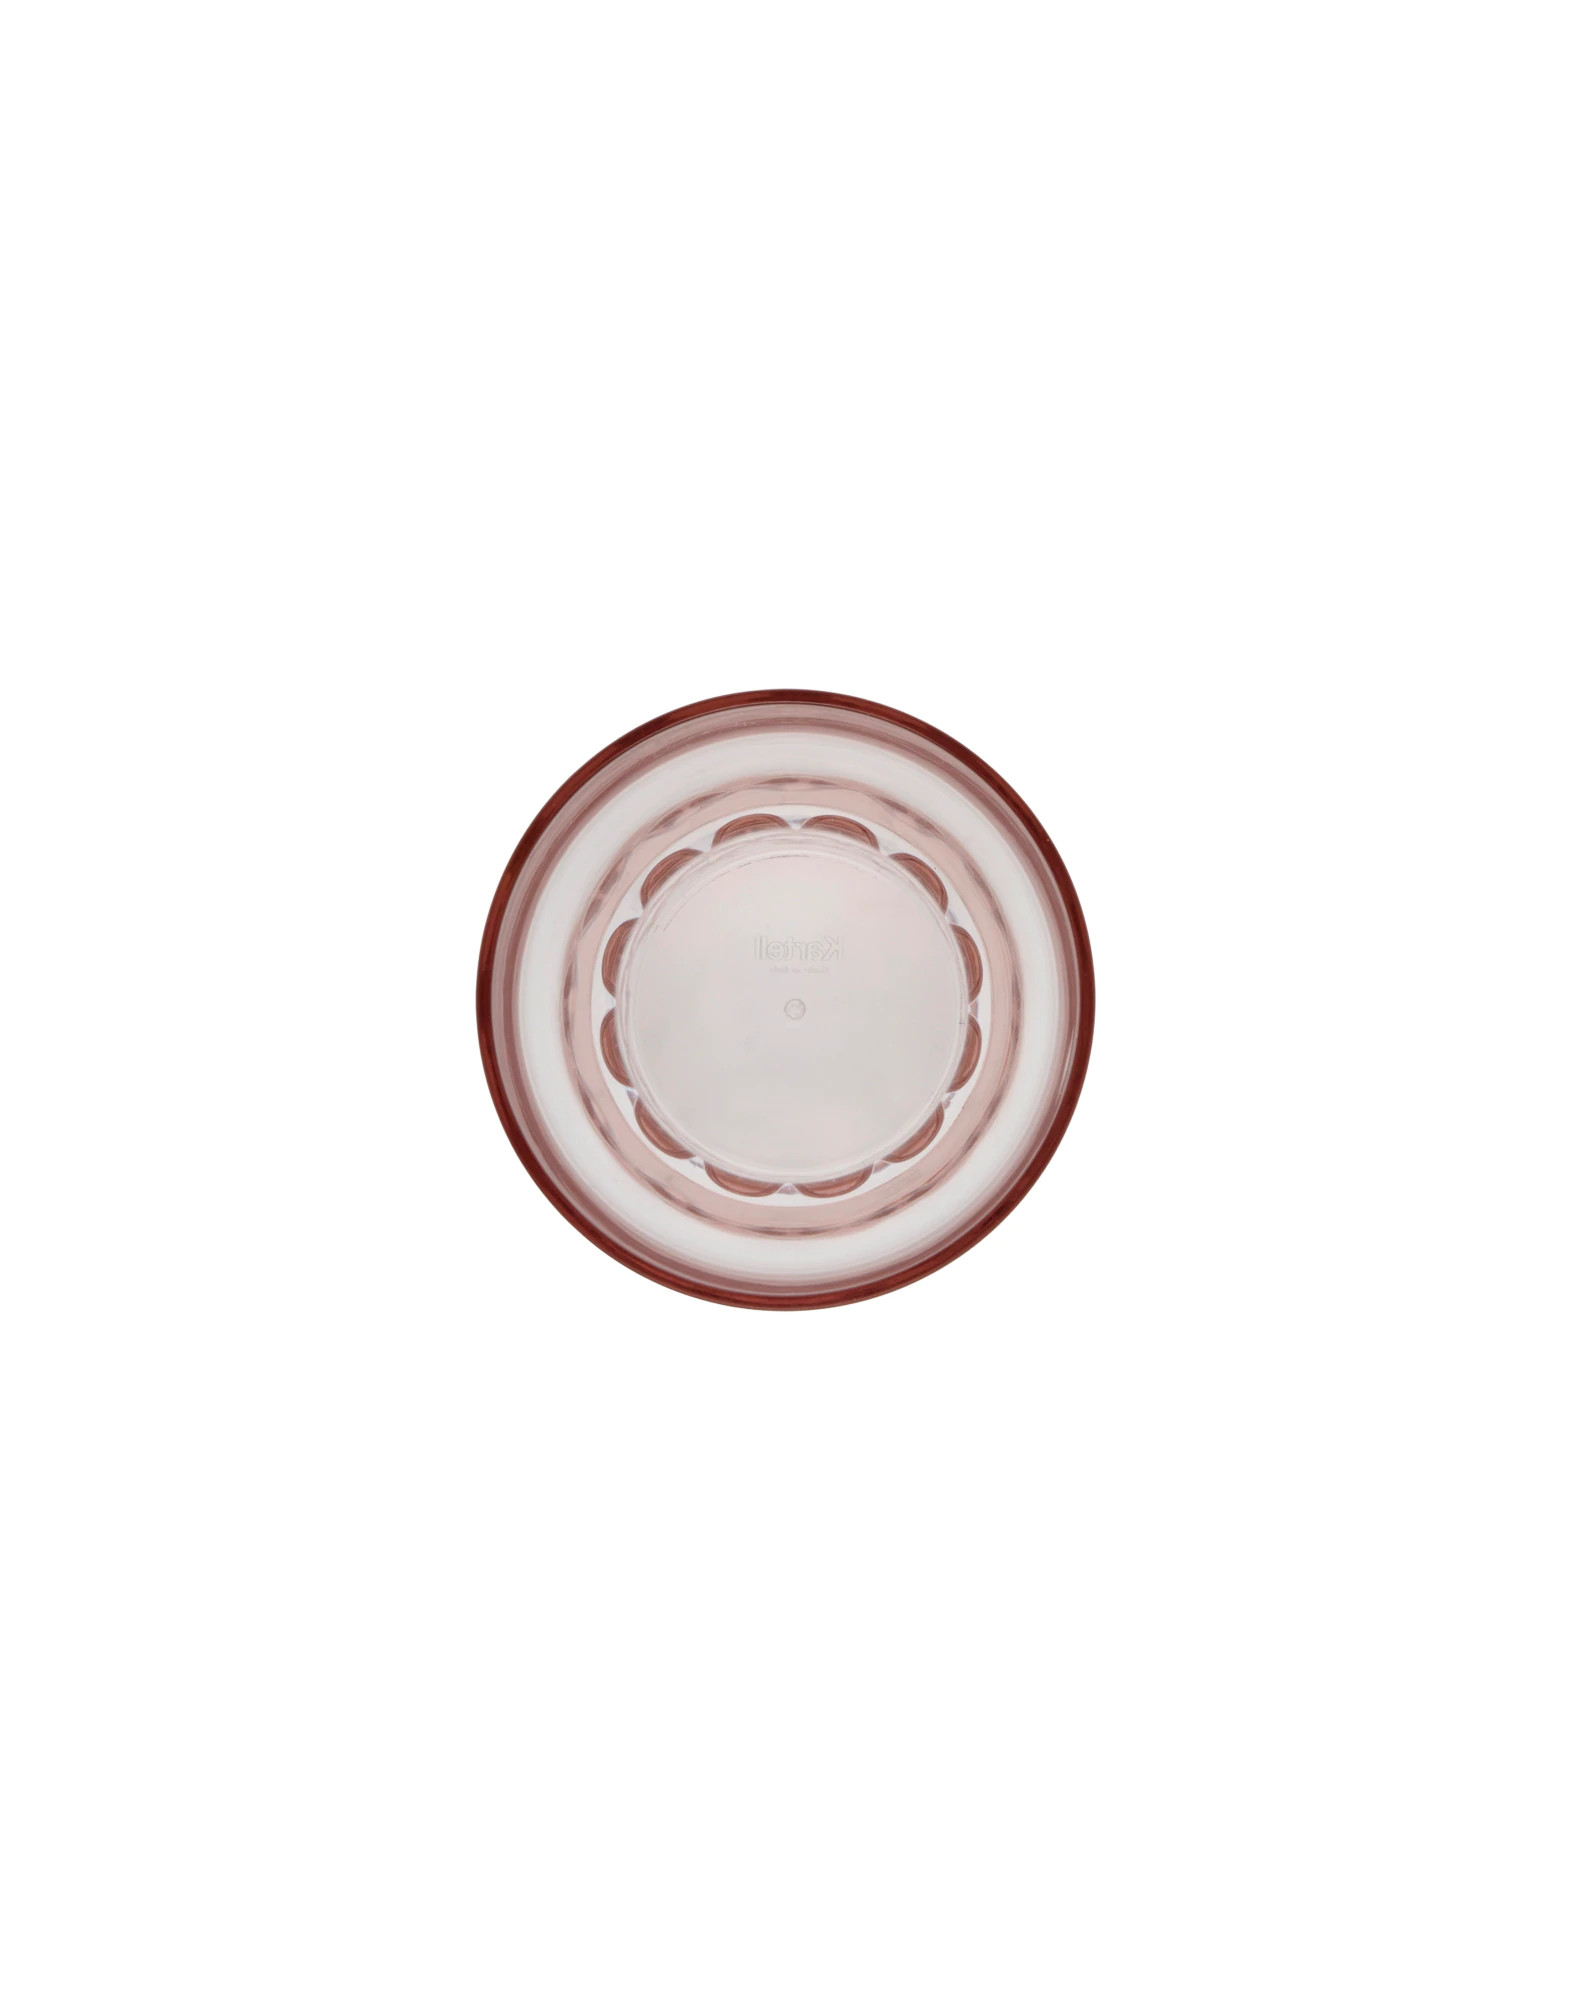 Kartell jellies family wine glass pink 3